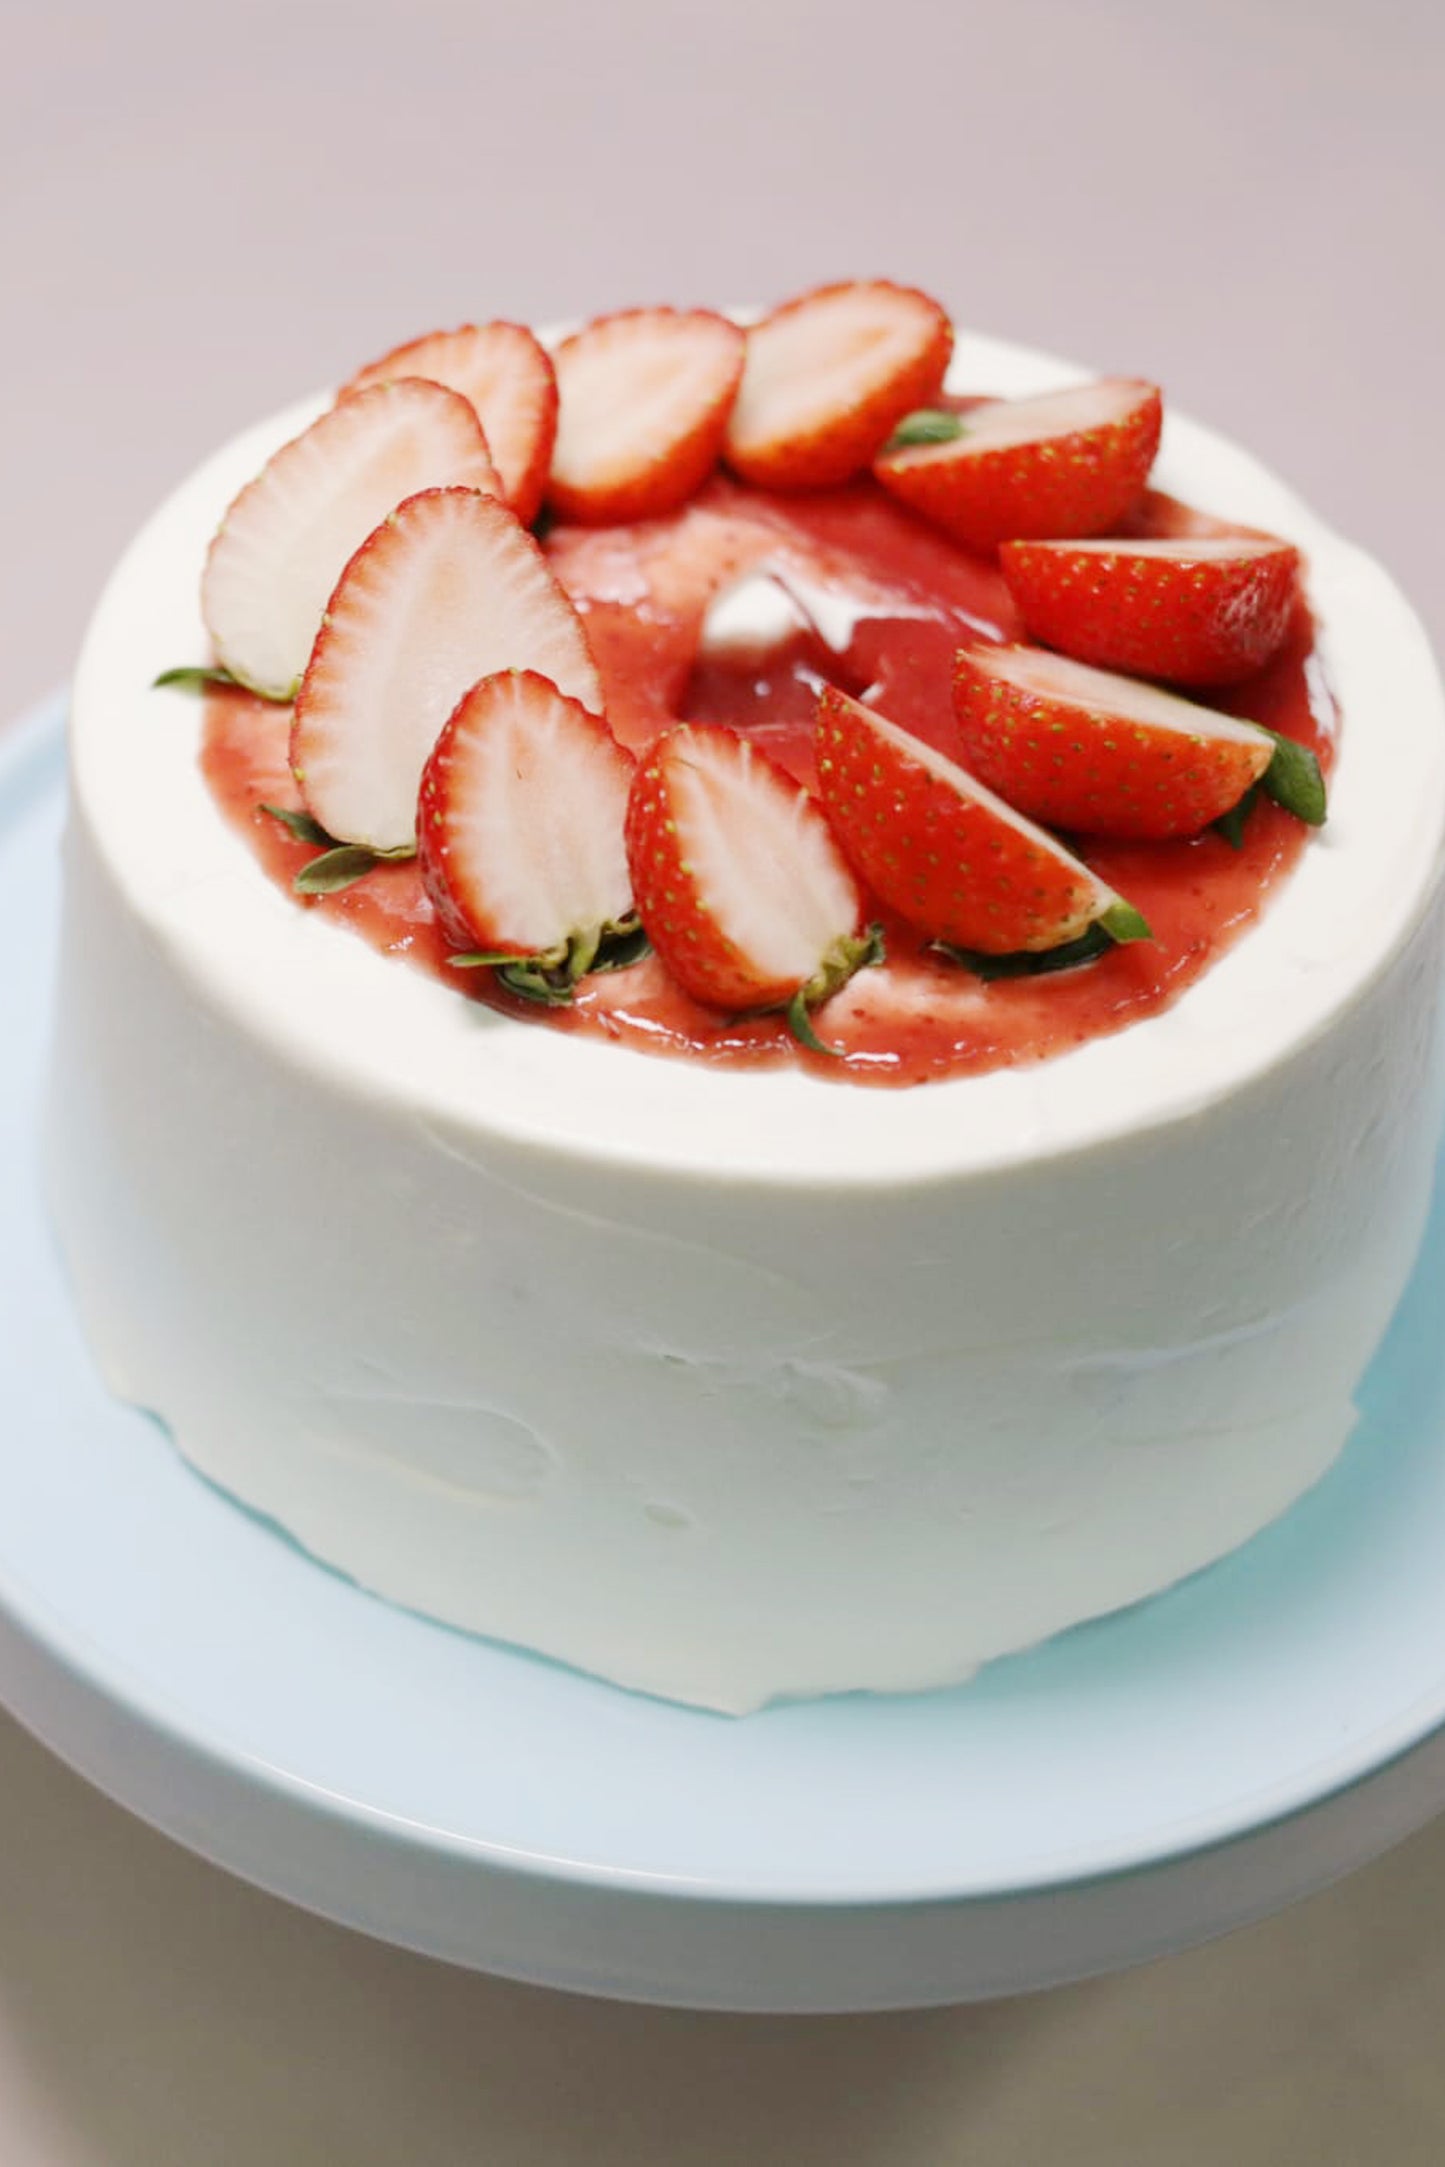 雲呢拿草莓戚風蛋糕 Vanilla Strawberry Chiffon Cake